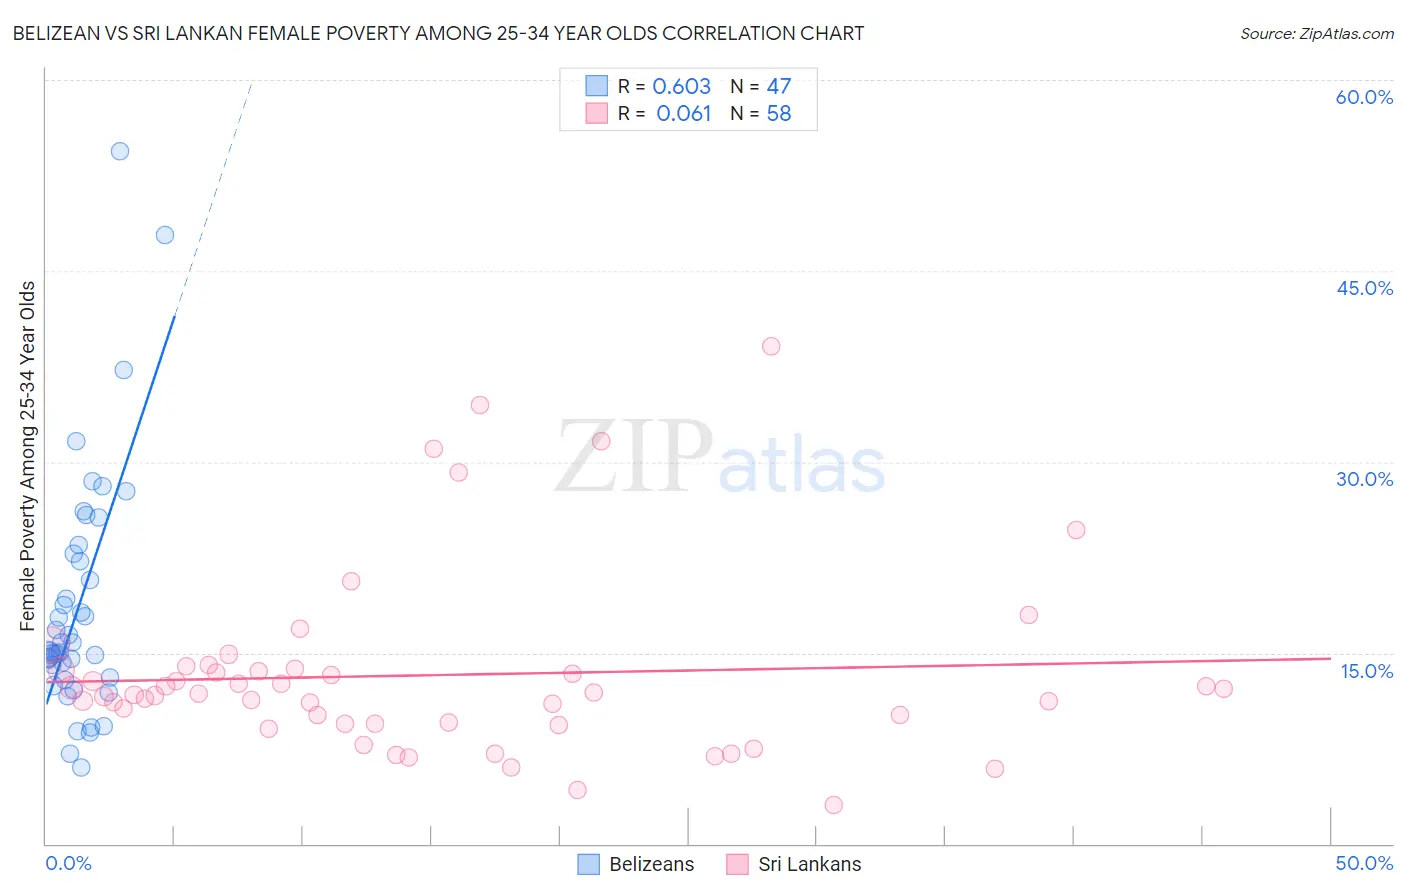 Belizean vs Sri Lankan Female Poverty Among 25-34 Year Olds